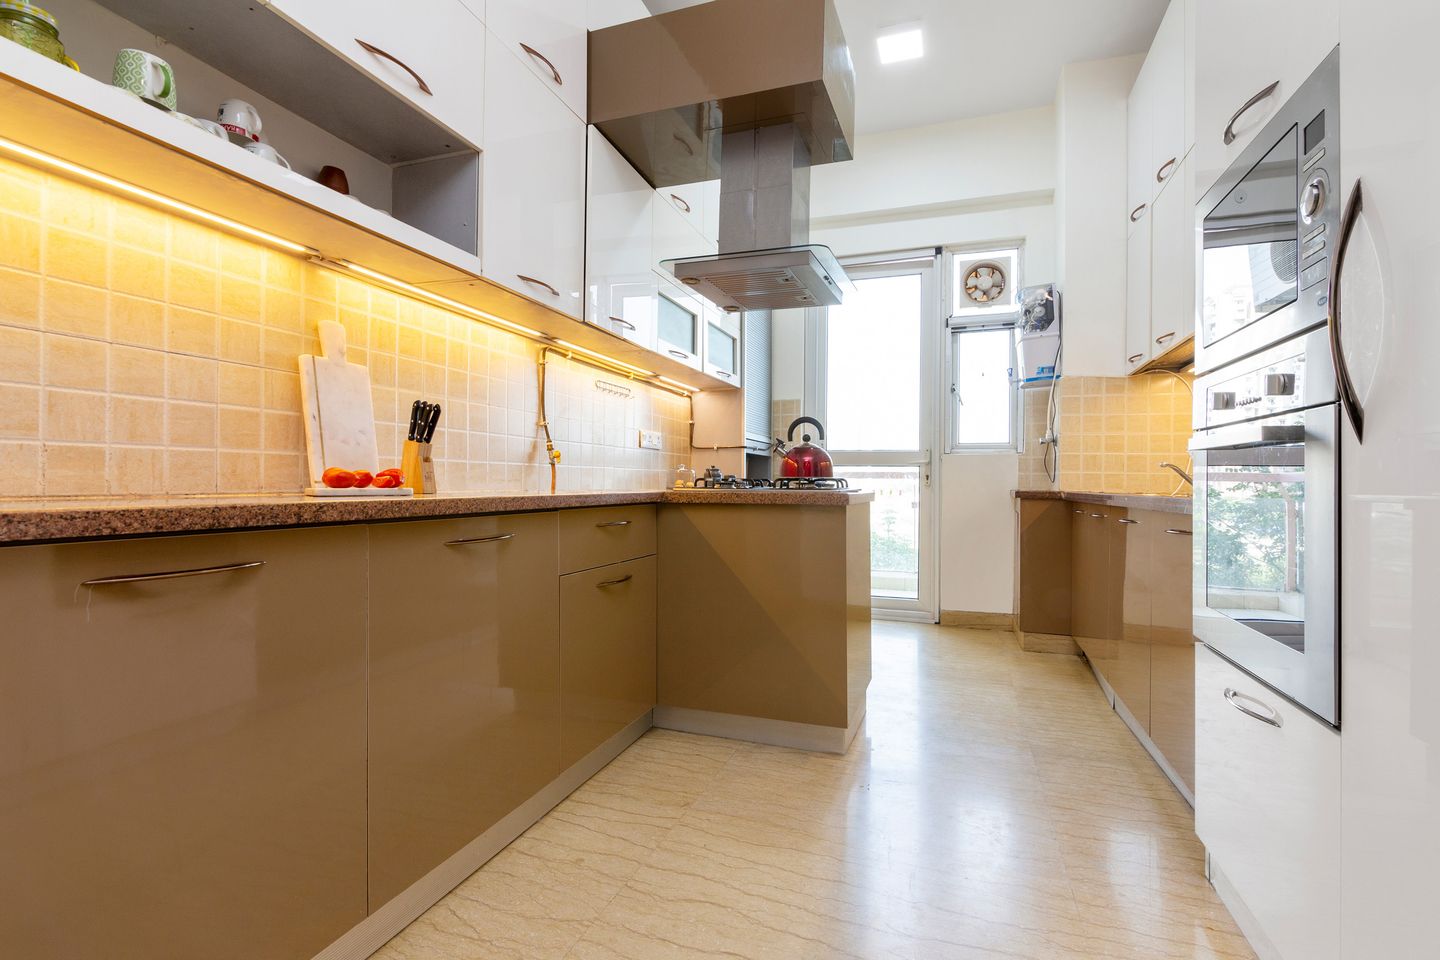 12x9 Ft Tan Base and Frosty White Parallel Modular Kitchen - Livspace